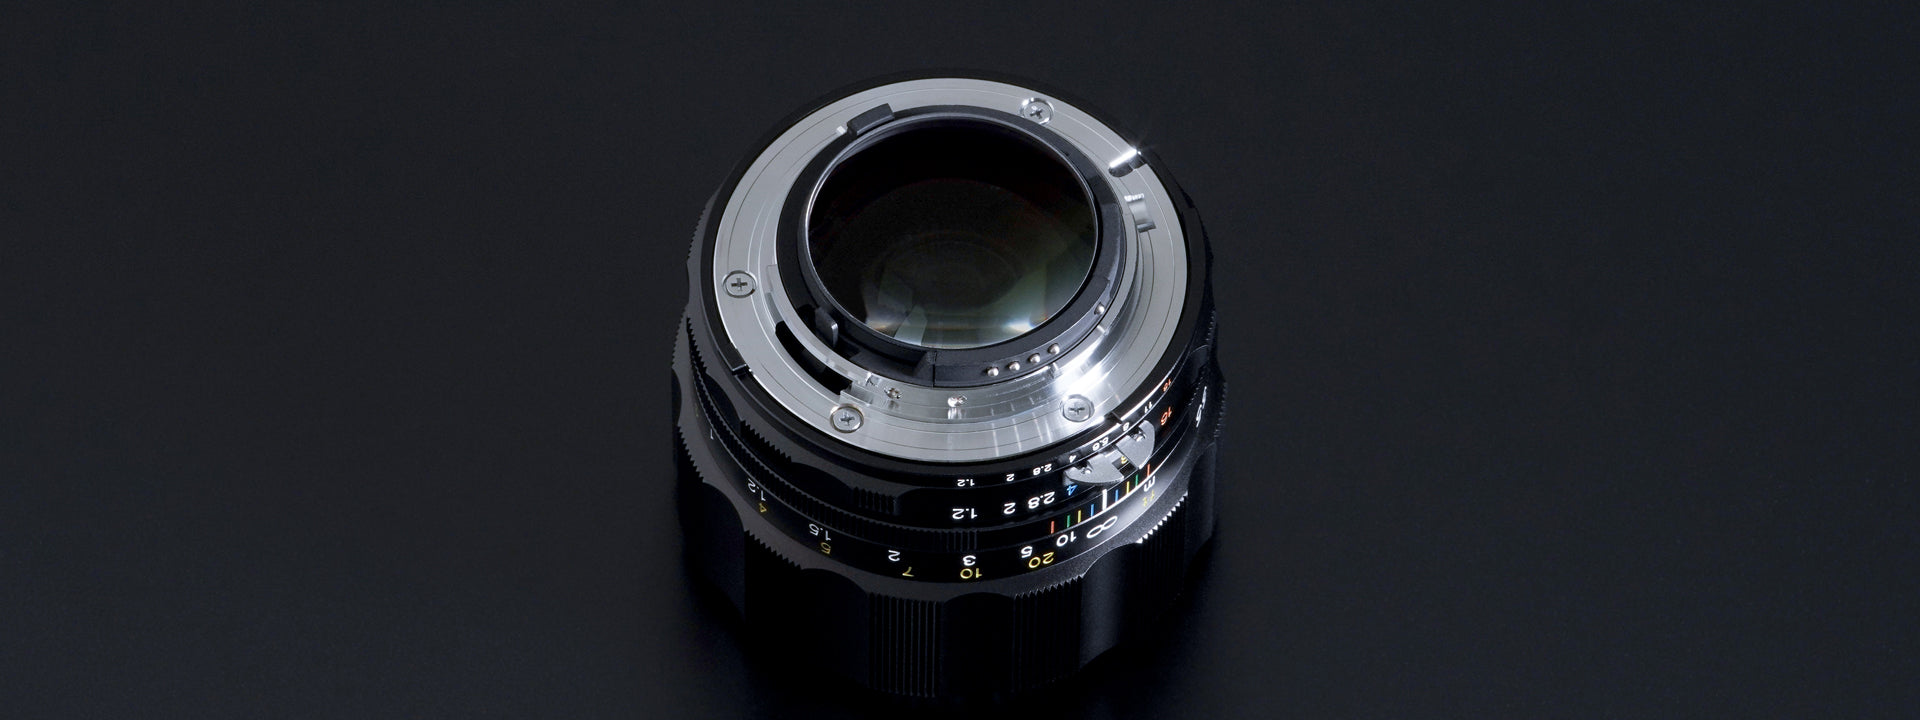 LATEST RELEASE ! Voigtlander NOKTON 55mm f1.2 SL IIs, Nikon F mount